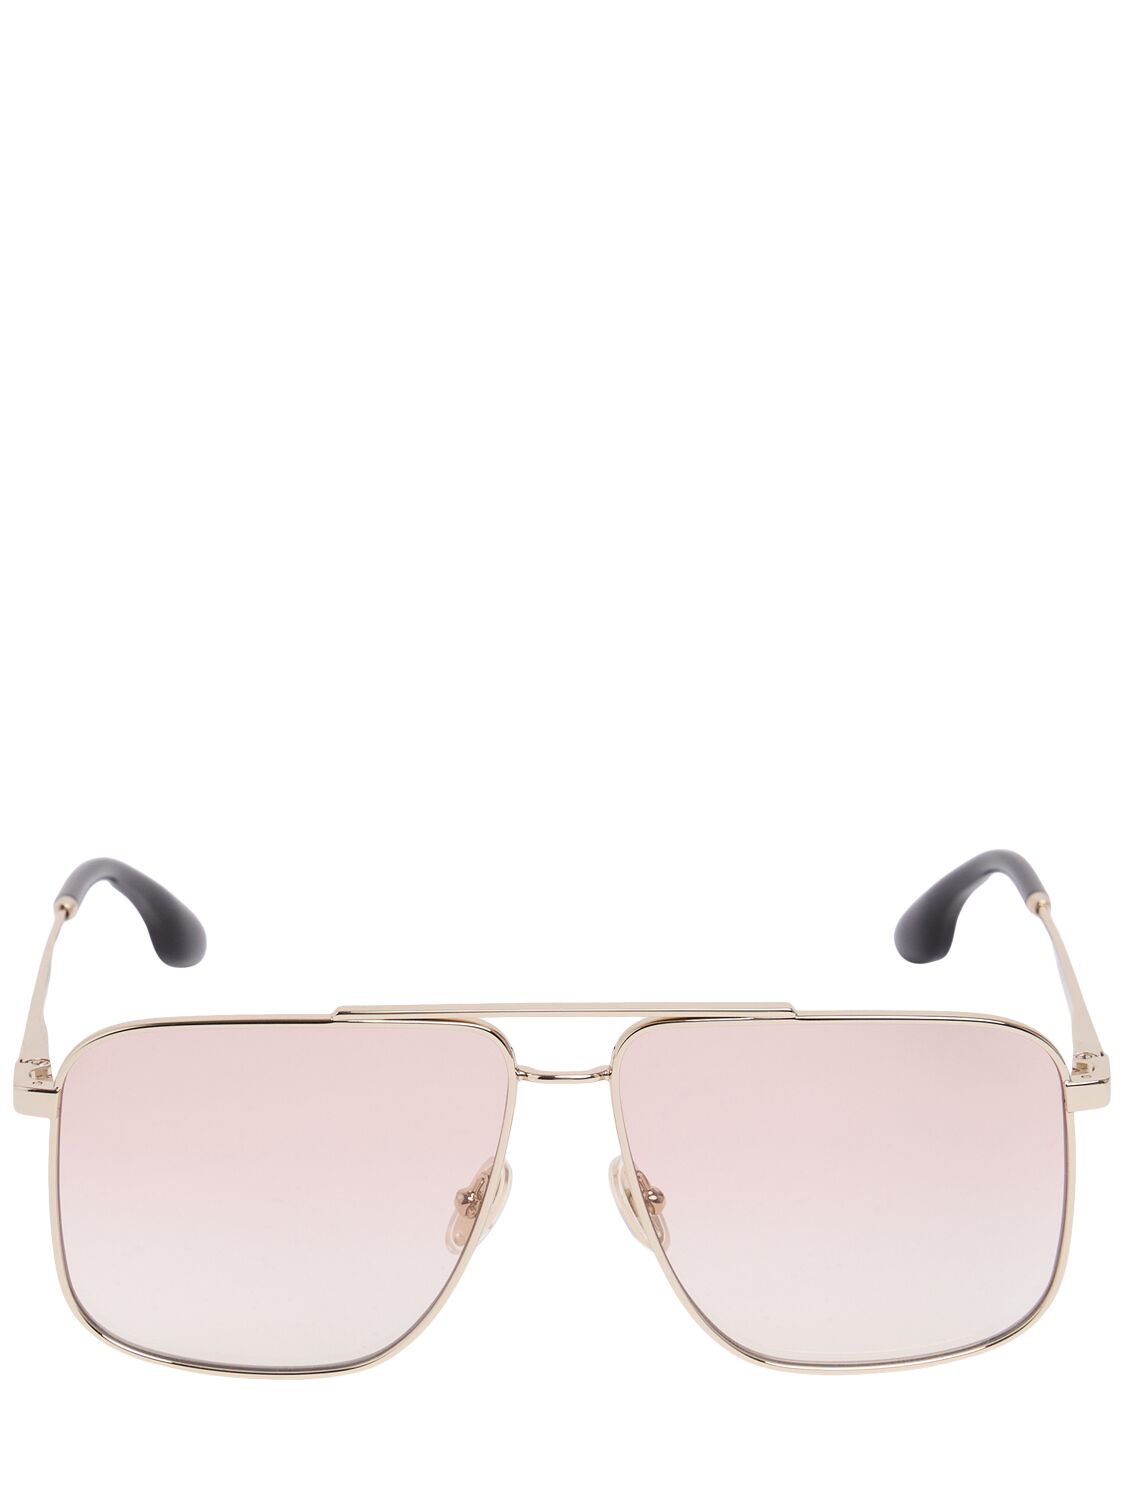 Victoria Beckham V Line Metal Sunglasses In Gold/blush